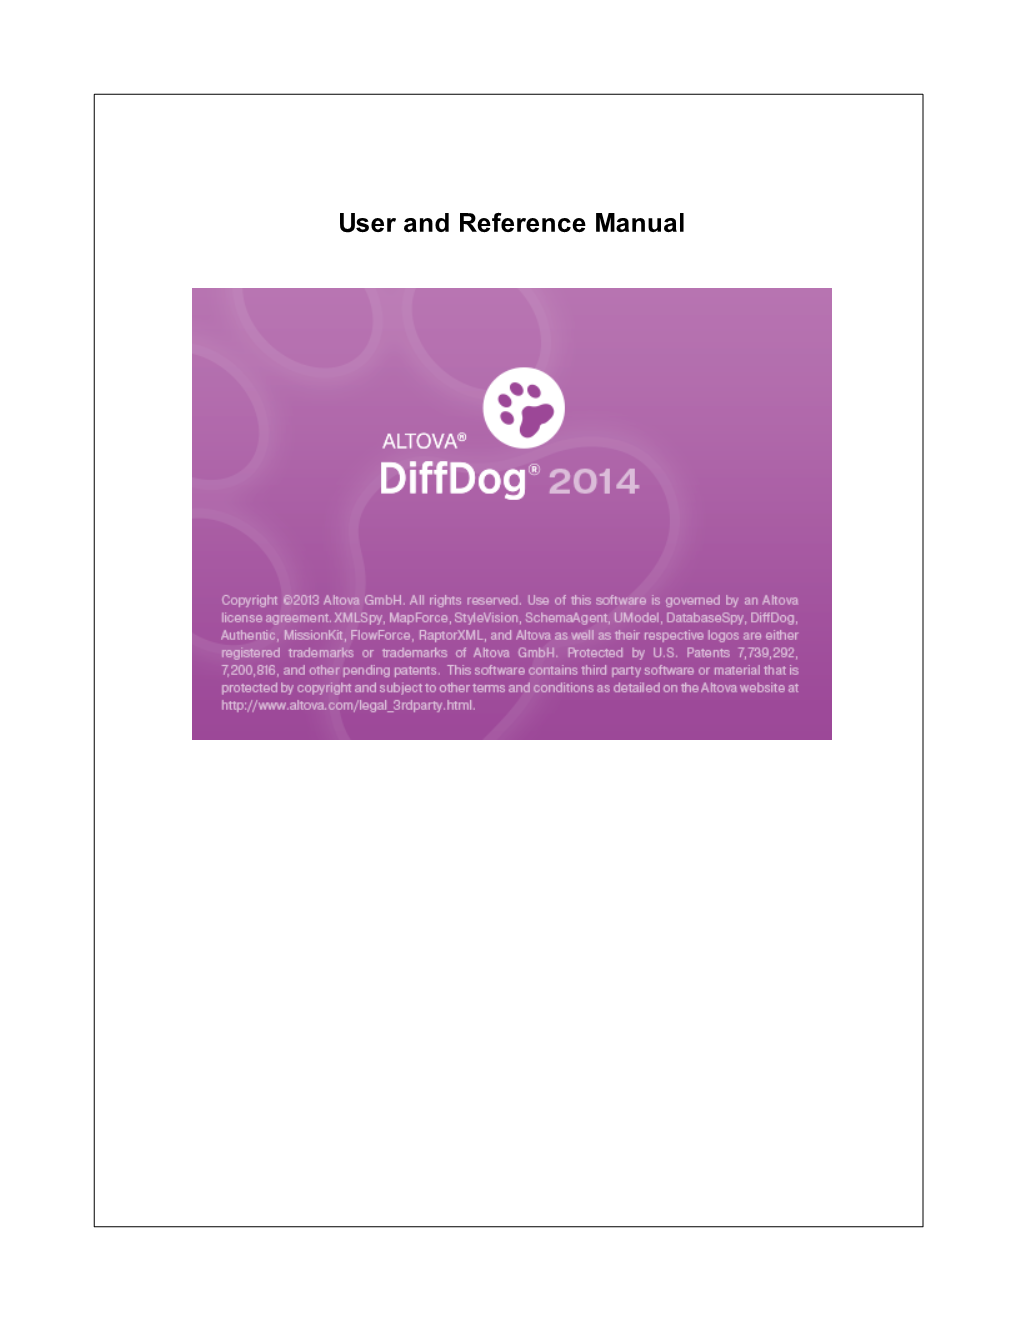 Altova Diffdog 2014 User & Reference Manual